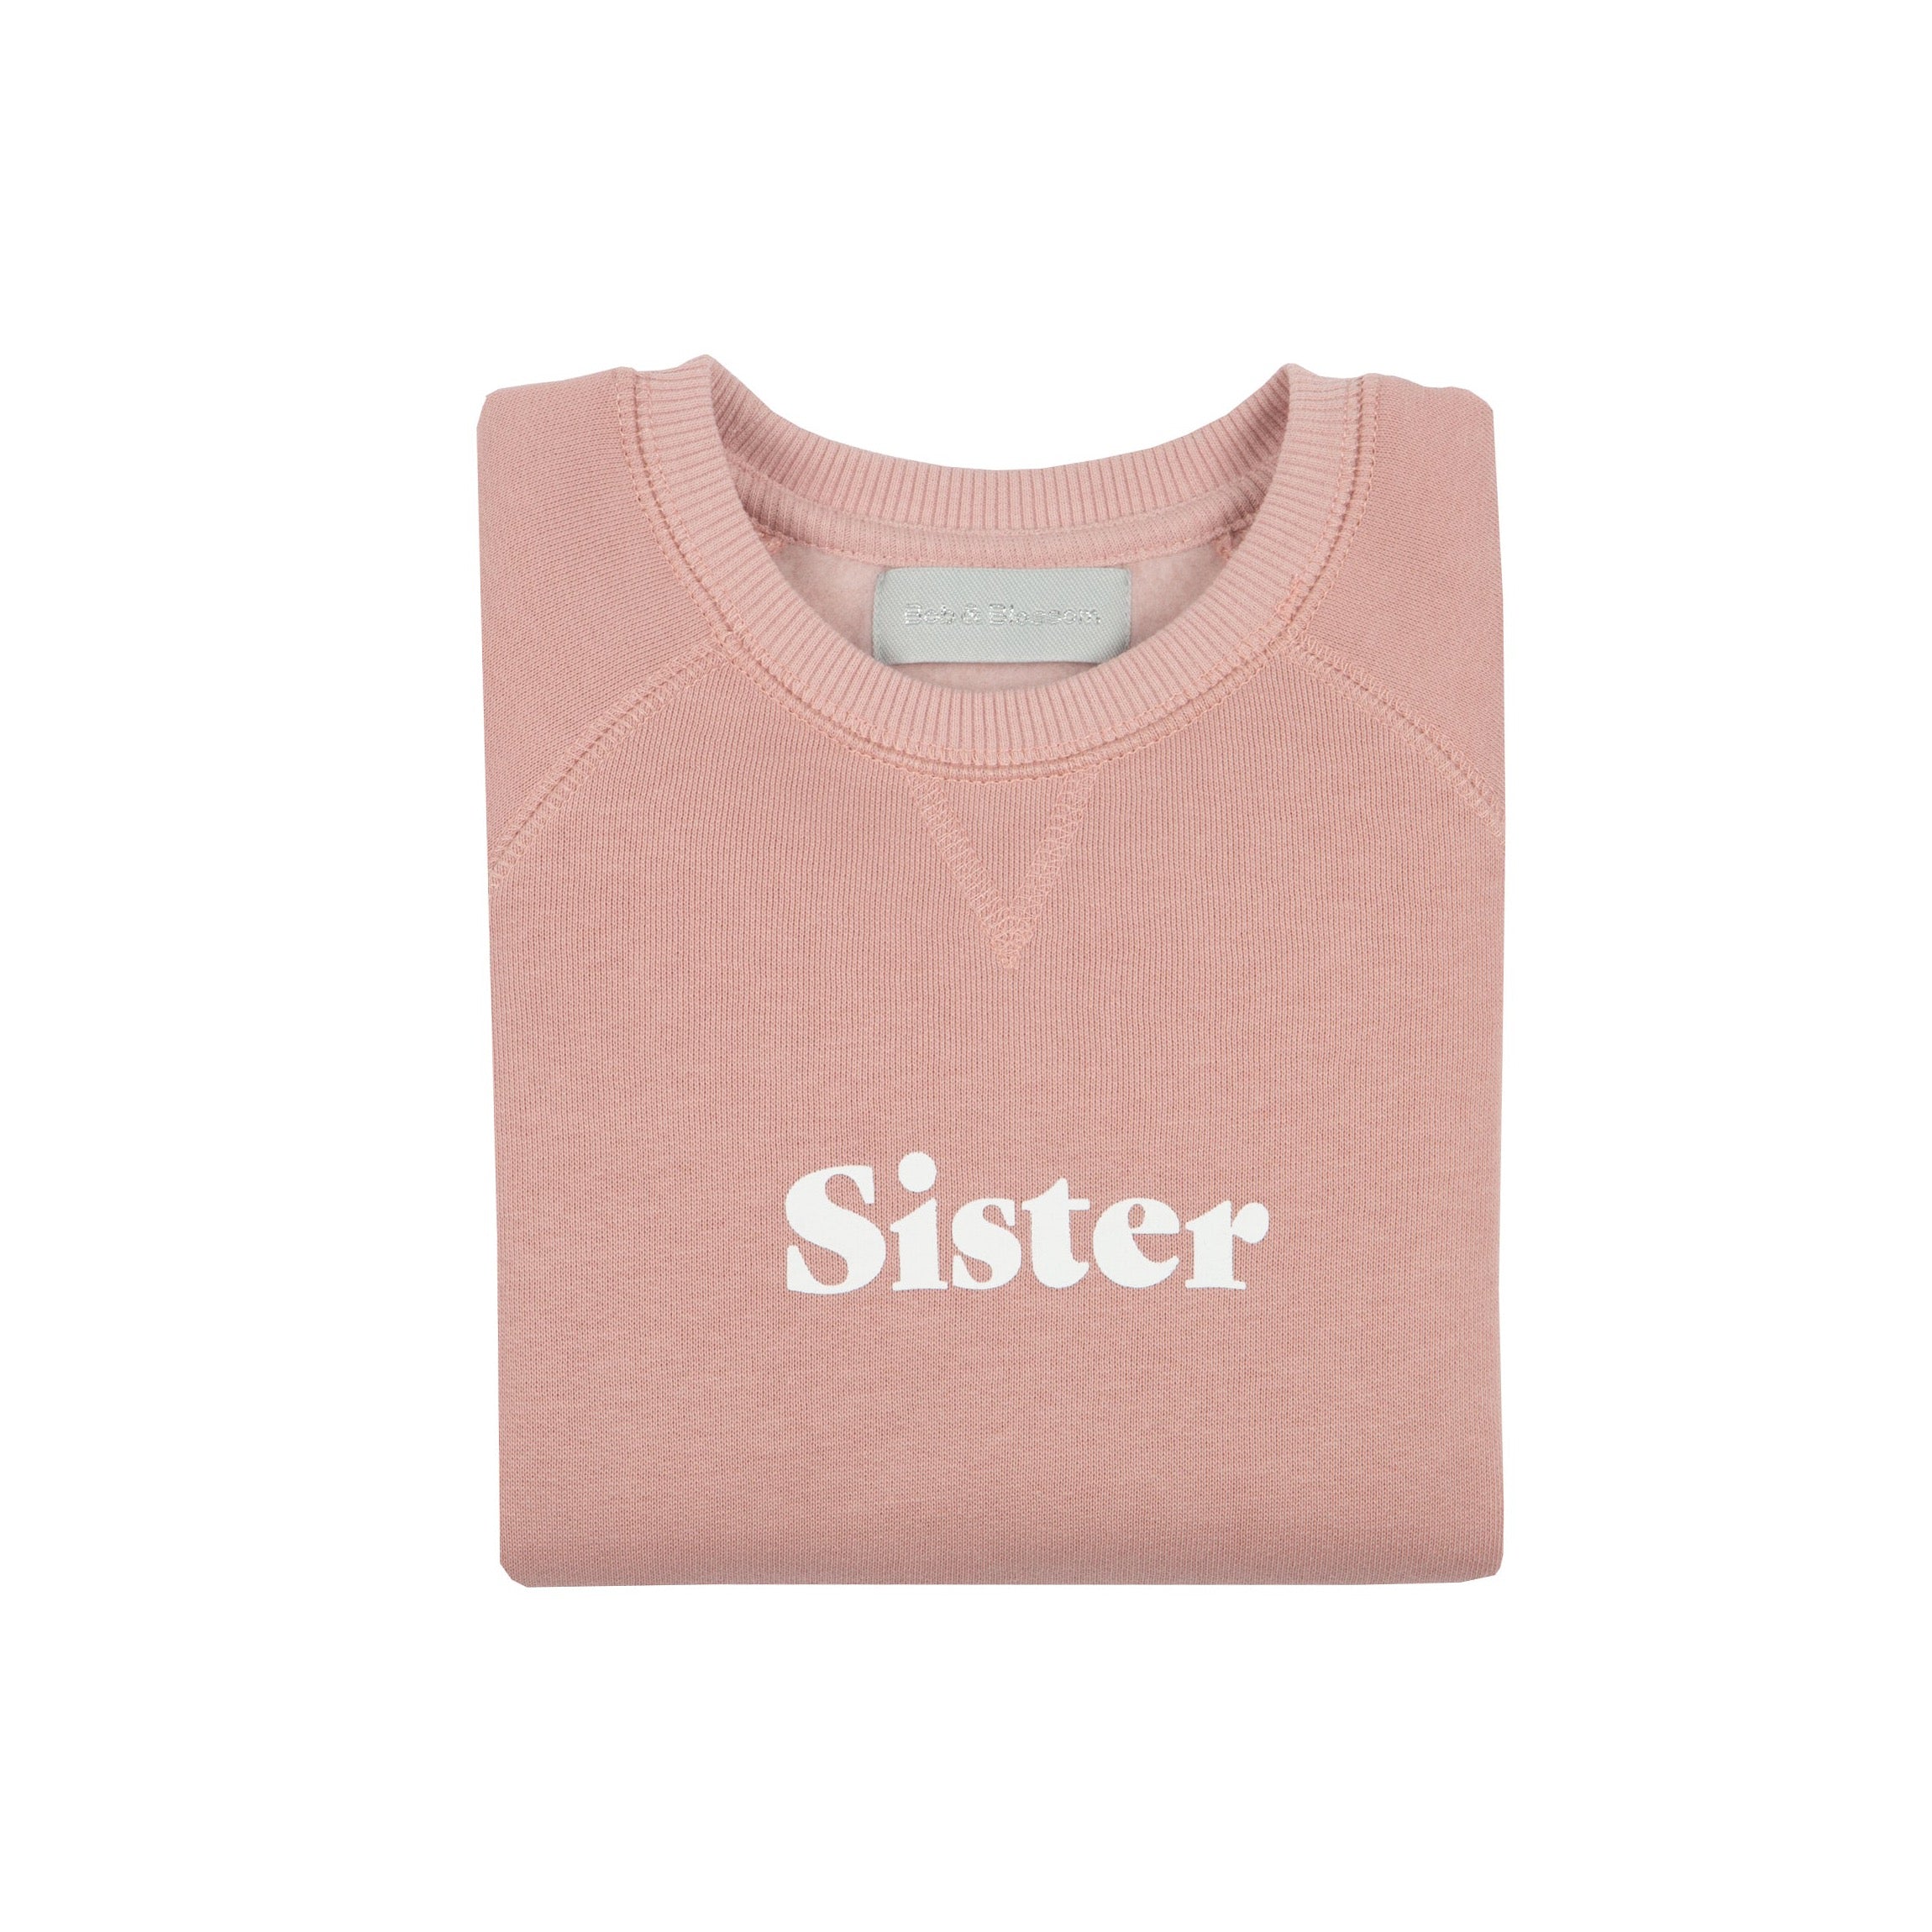 'Sister' Sweatshirt